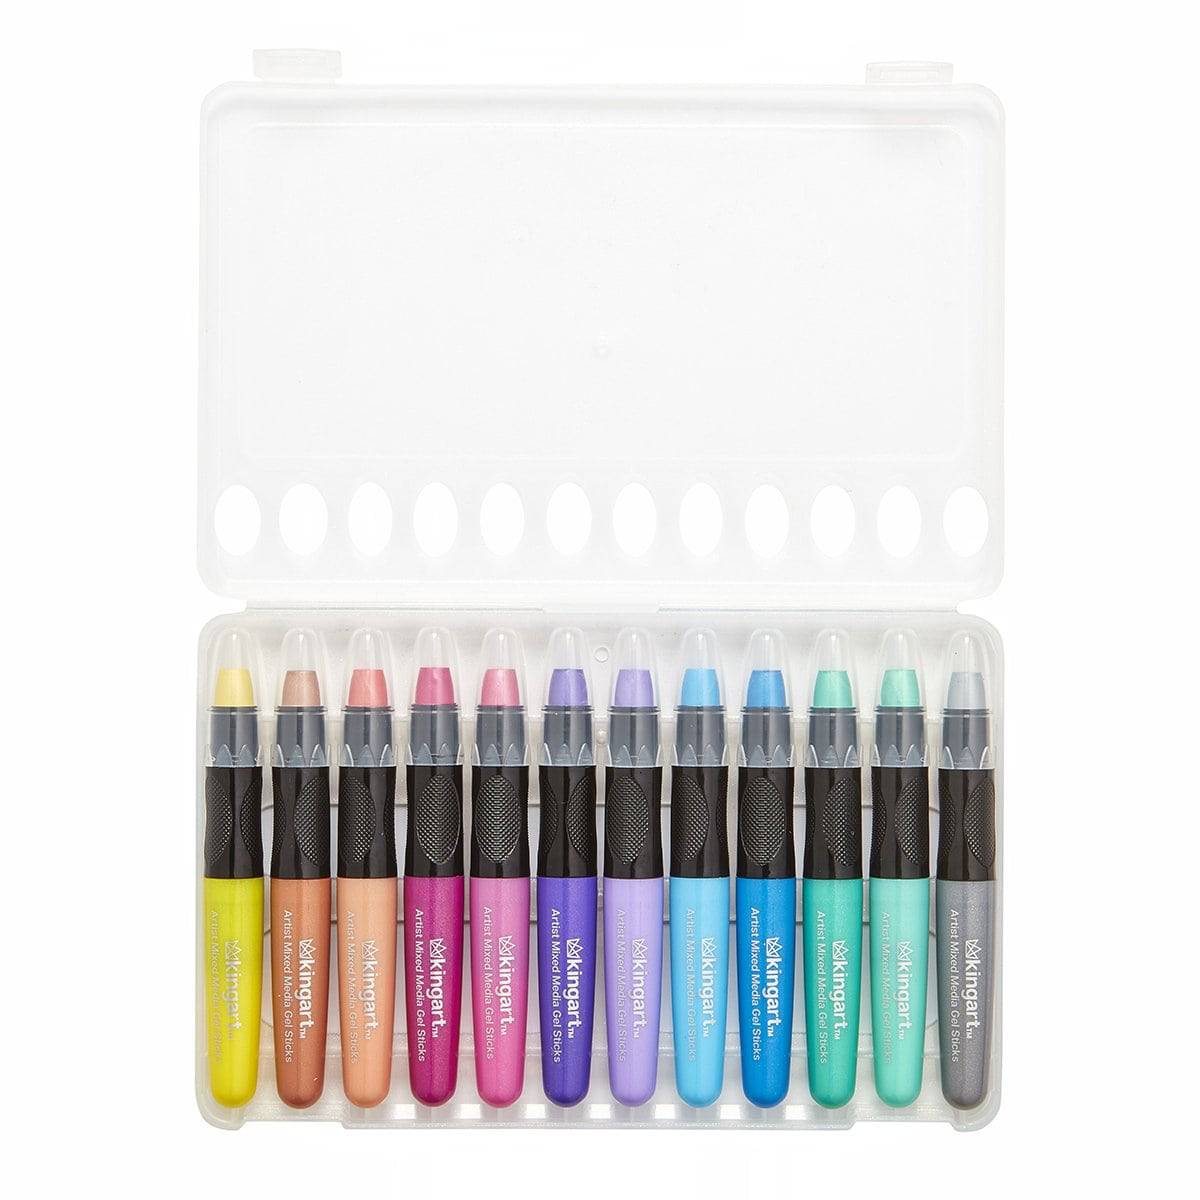 KINGART® Gel Stick Artist Mixed Media Watercolor Crayons, Set of 12 Primary  Colors